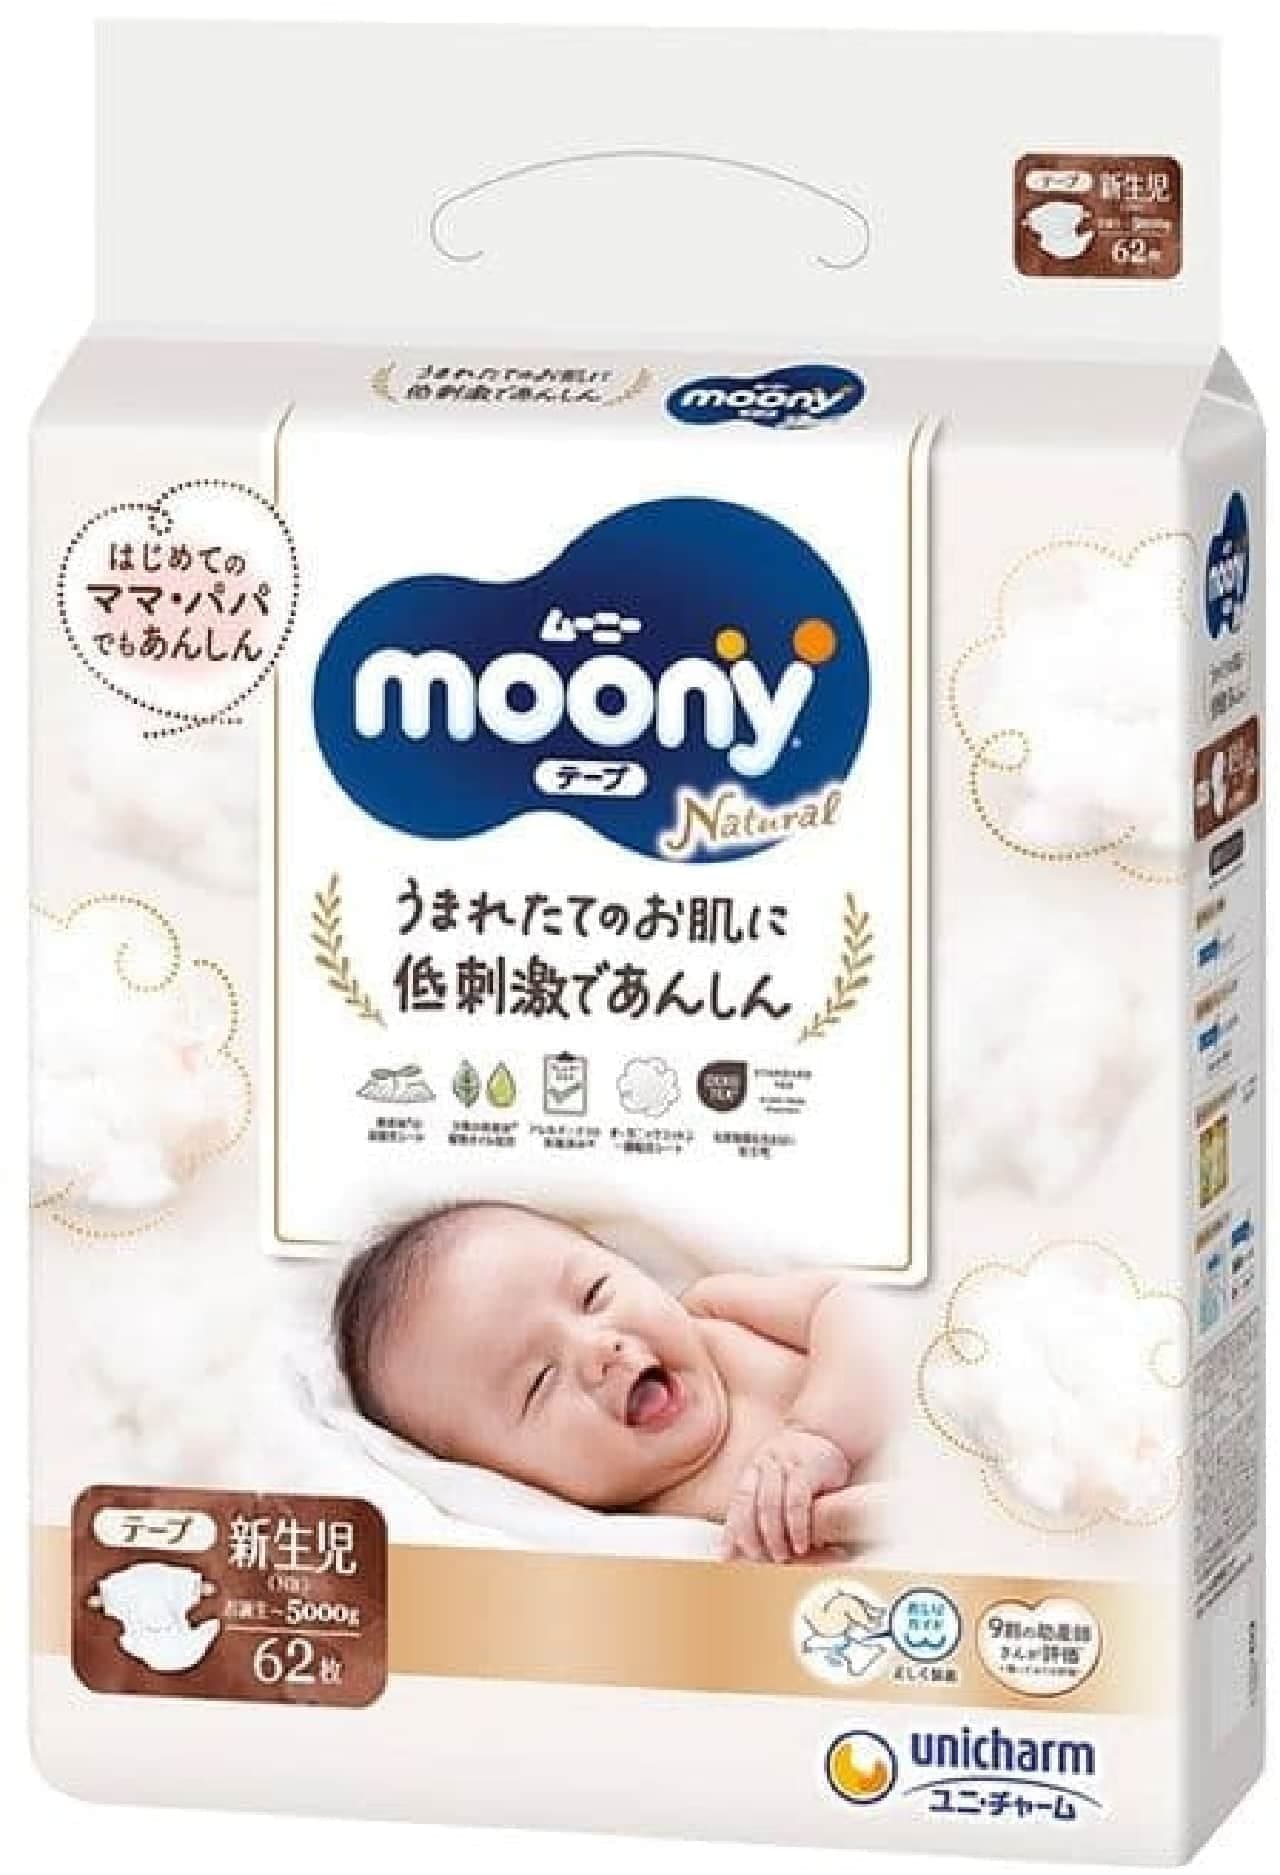 Moony (Unicharm) disposable diapers